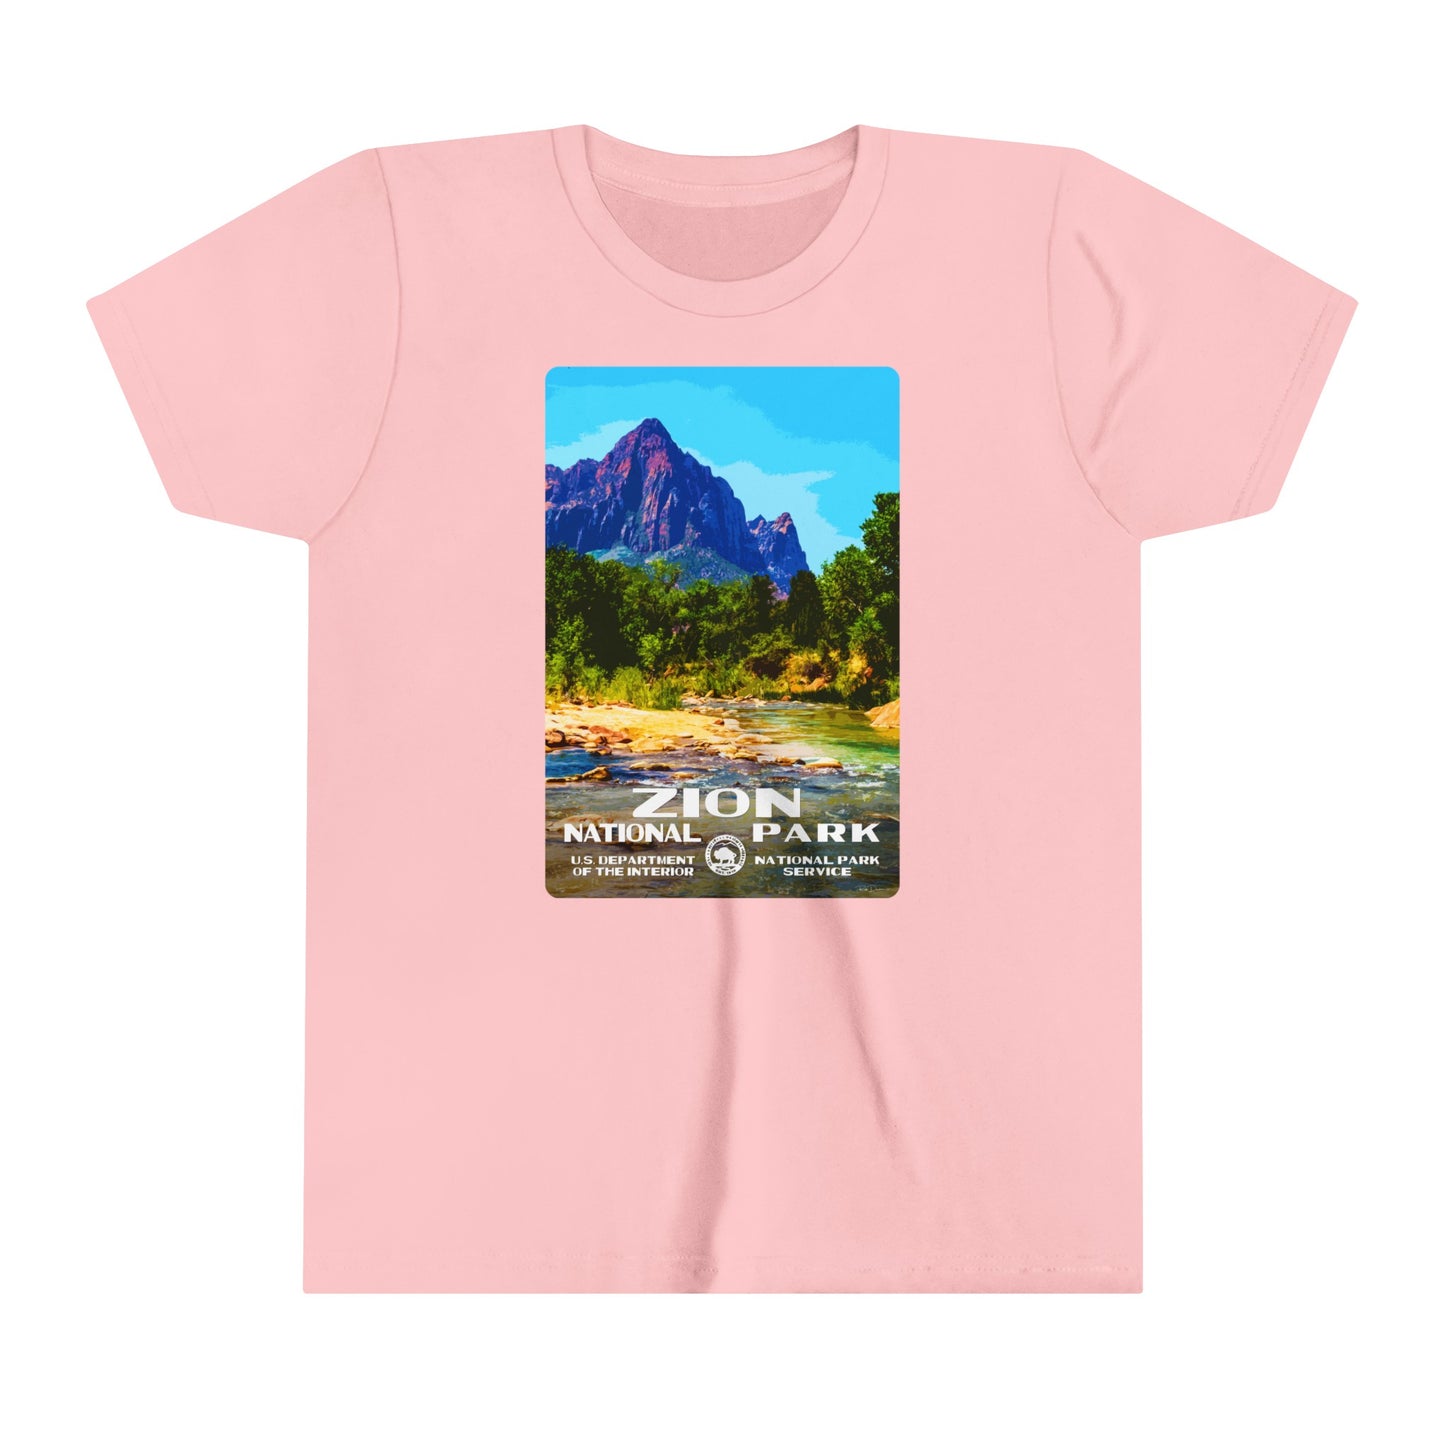 Zion National Park (The Watchman)  Kids' T-Shirt